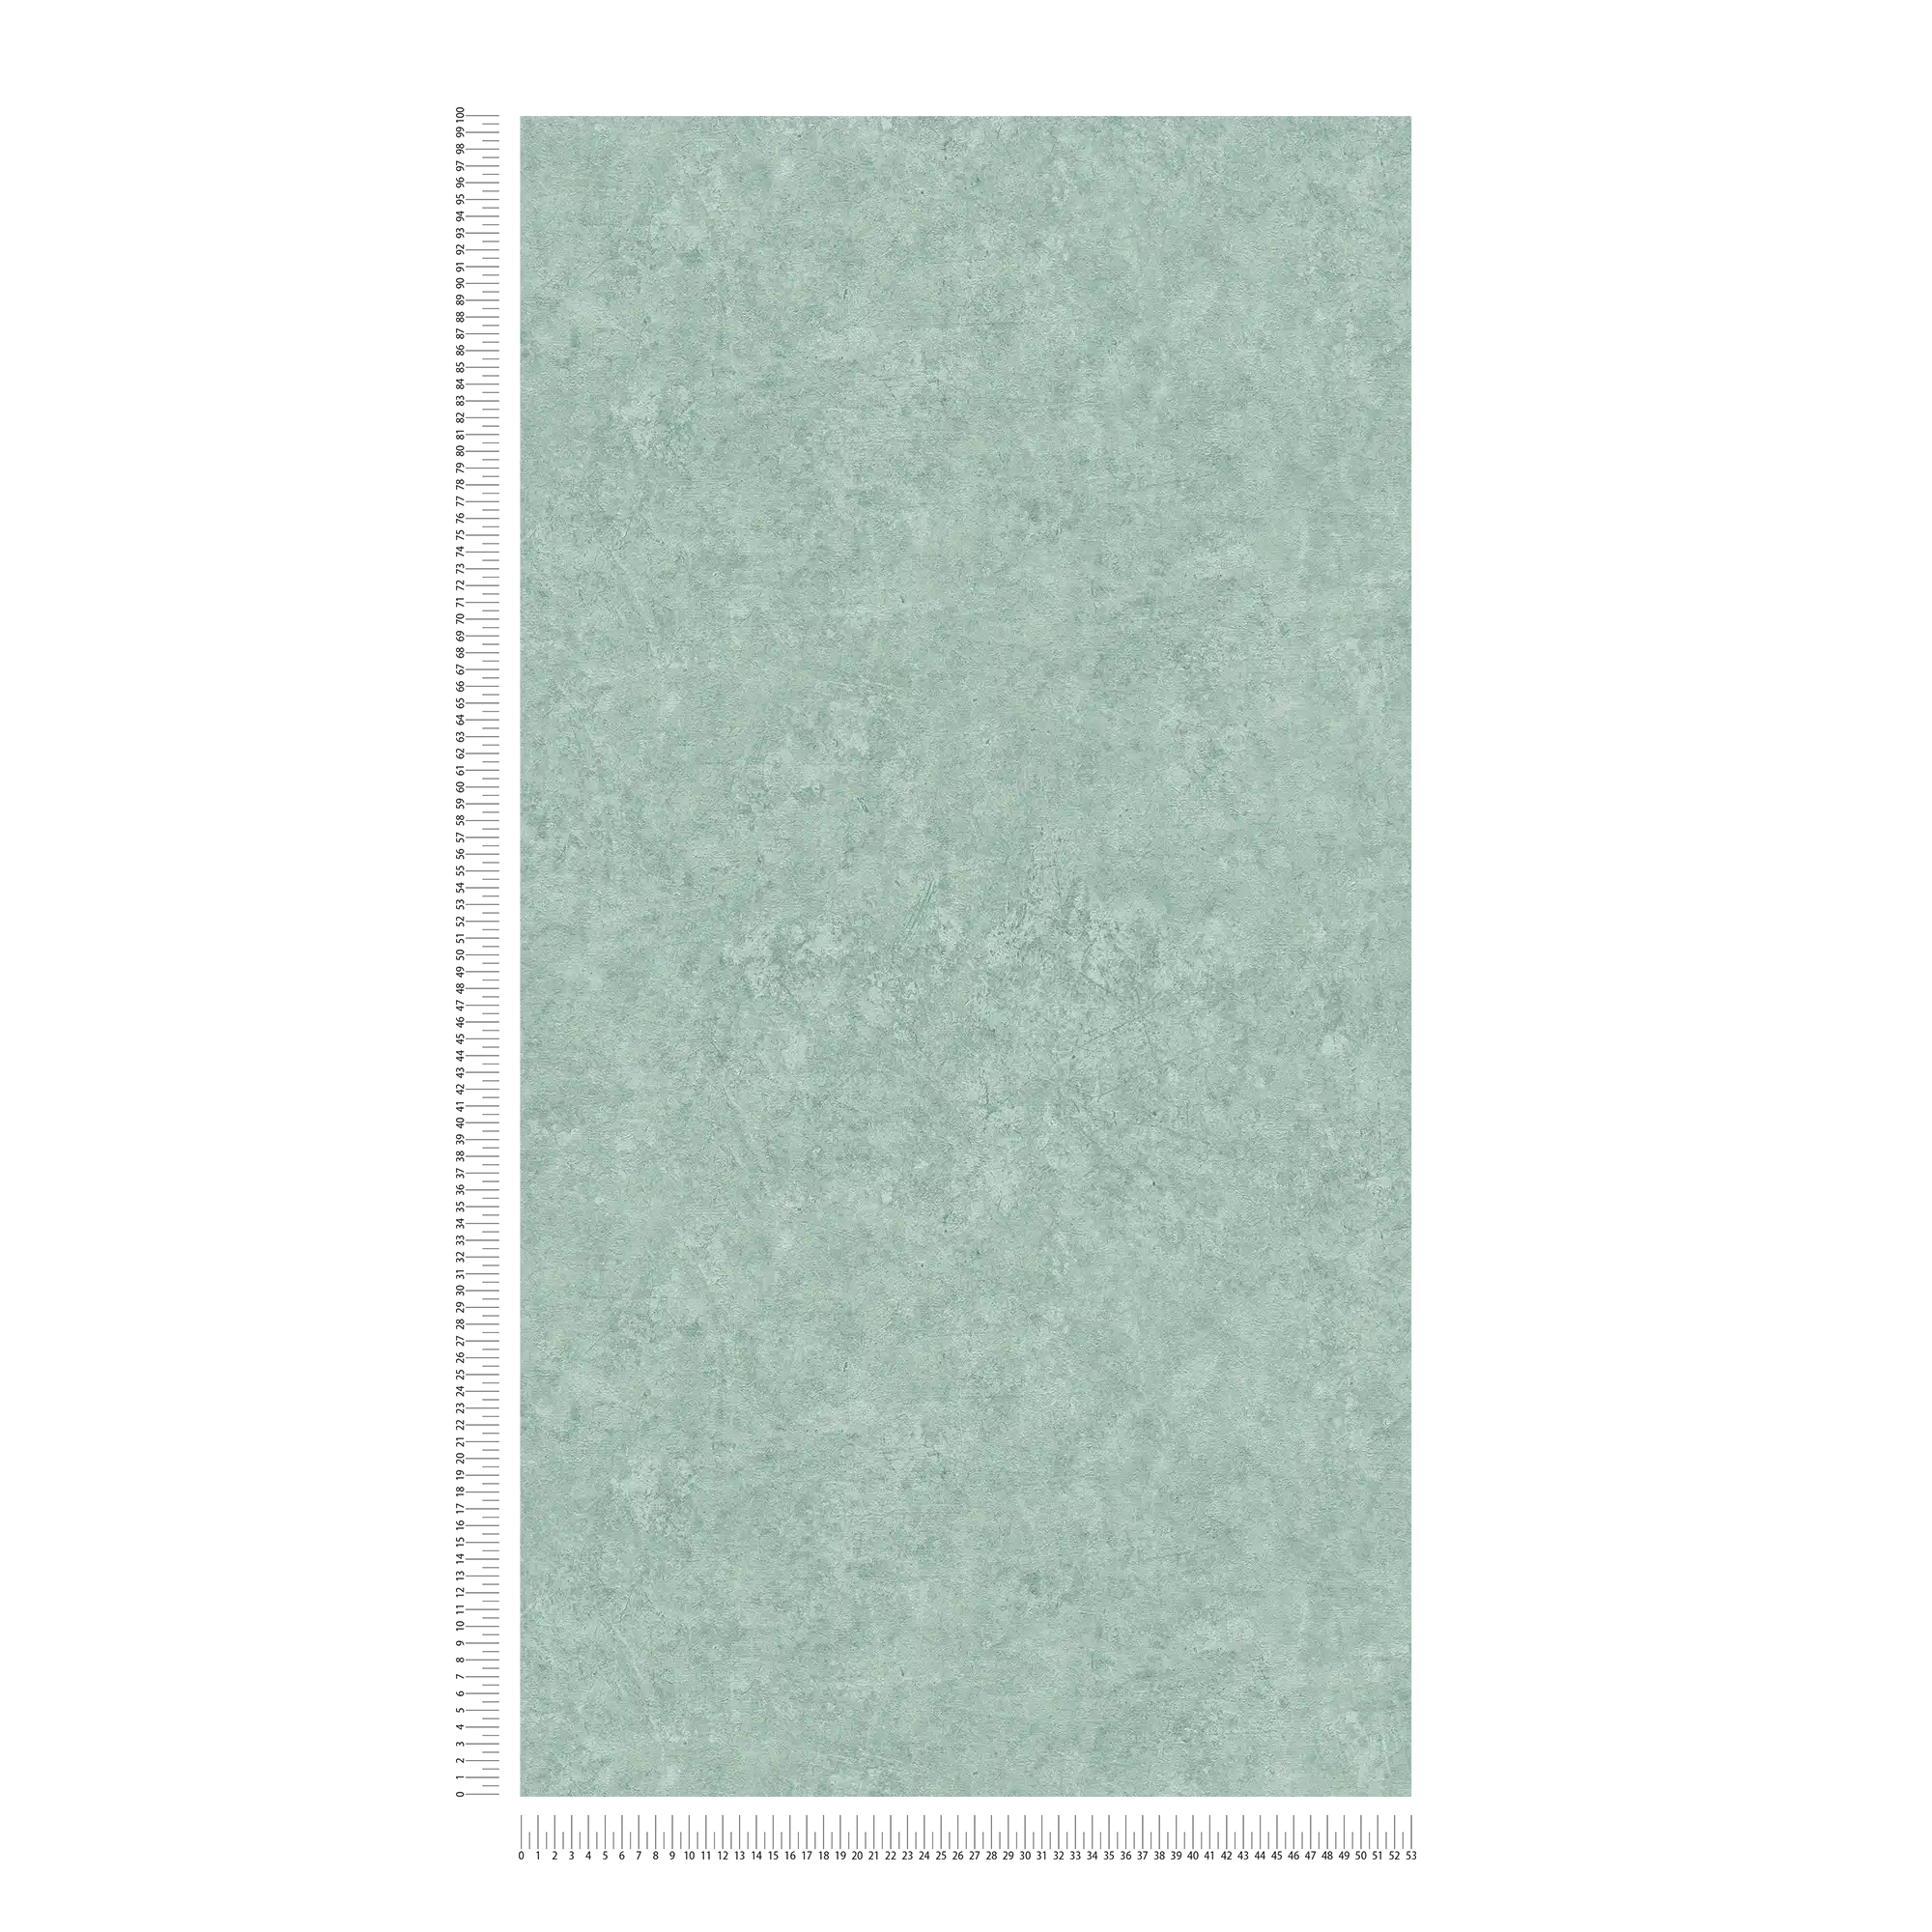             Textured non-woven wallpaper in plain - green
        